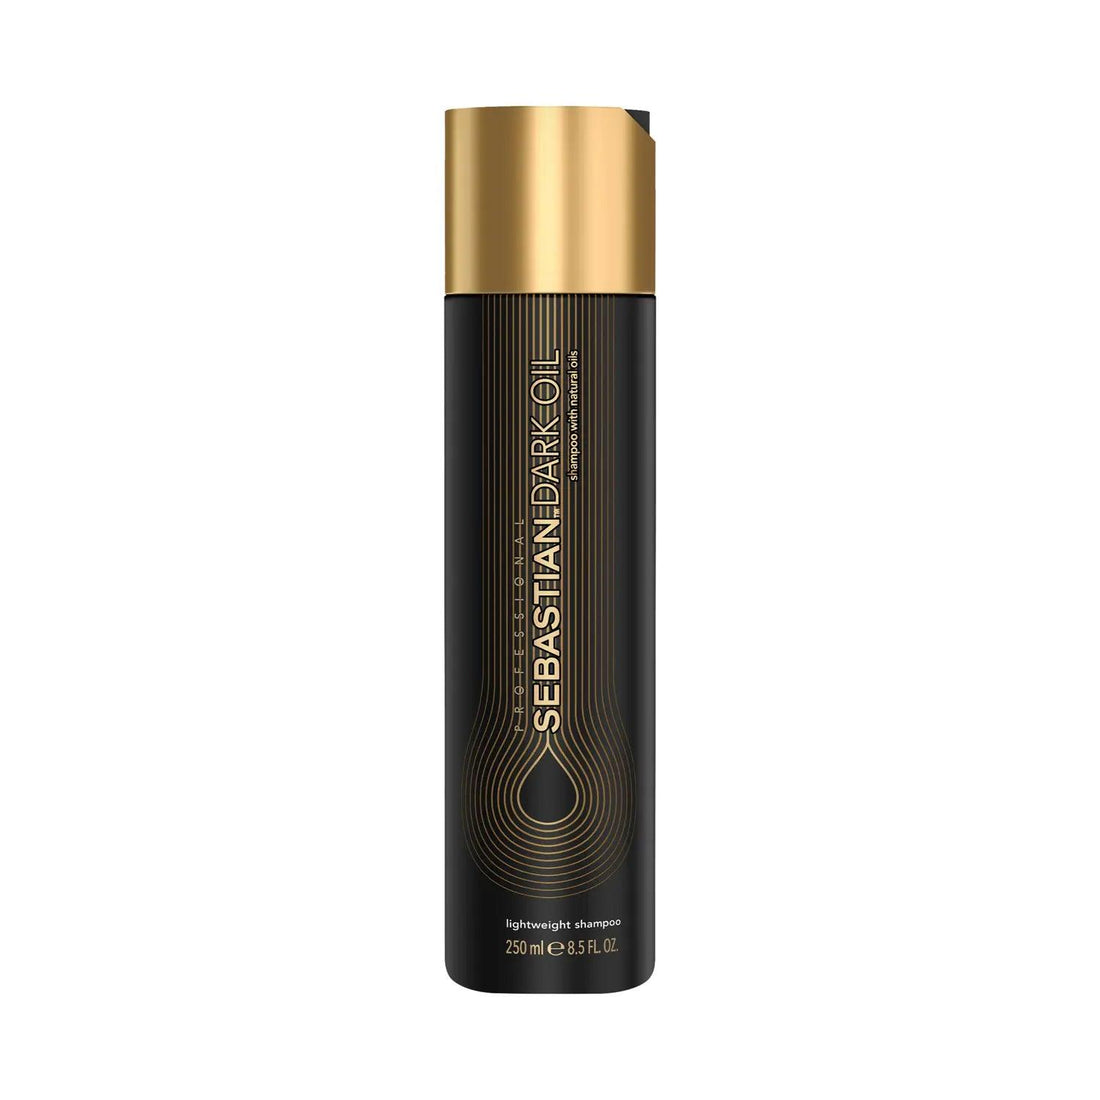 Sebastian Professional Dark Oil Lightweight Shampoo (250ml) - Eklipz